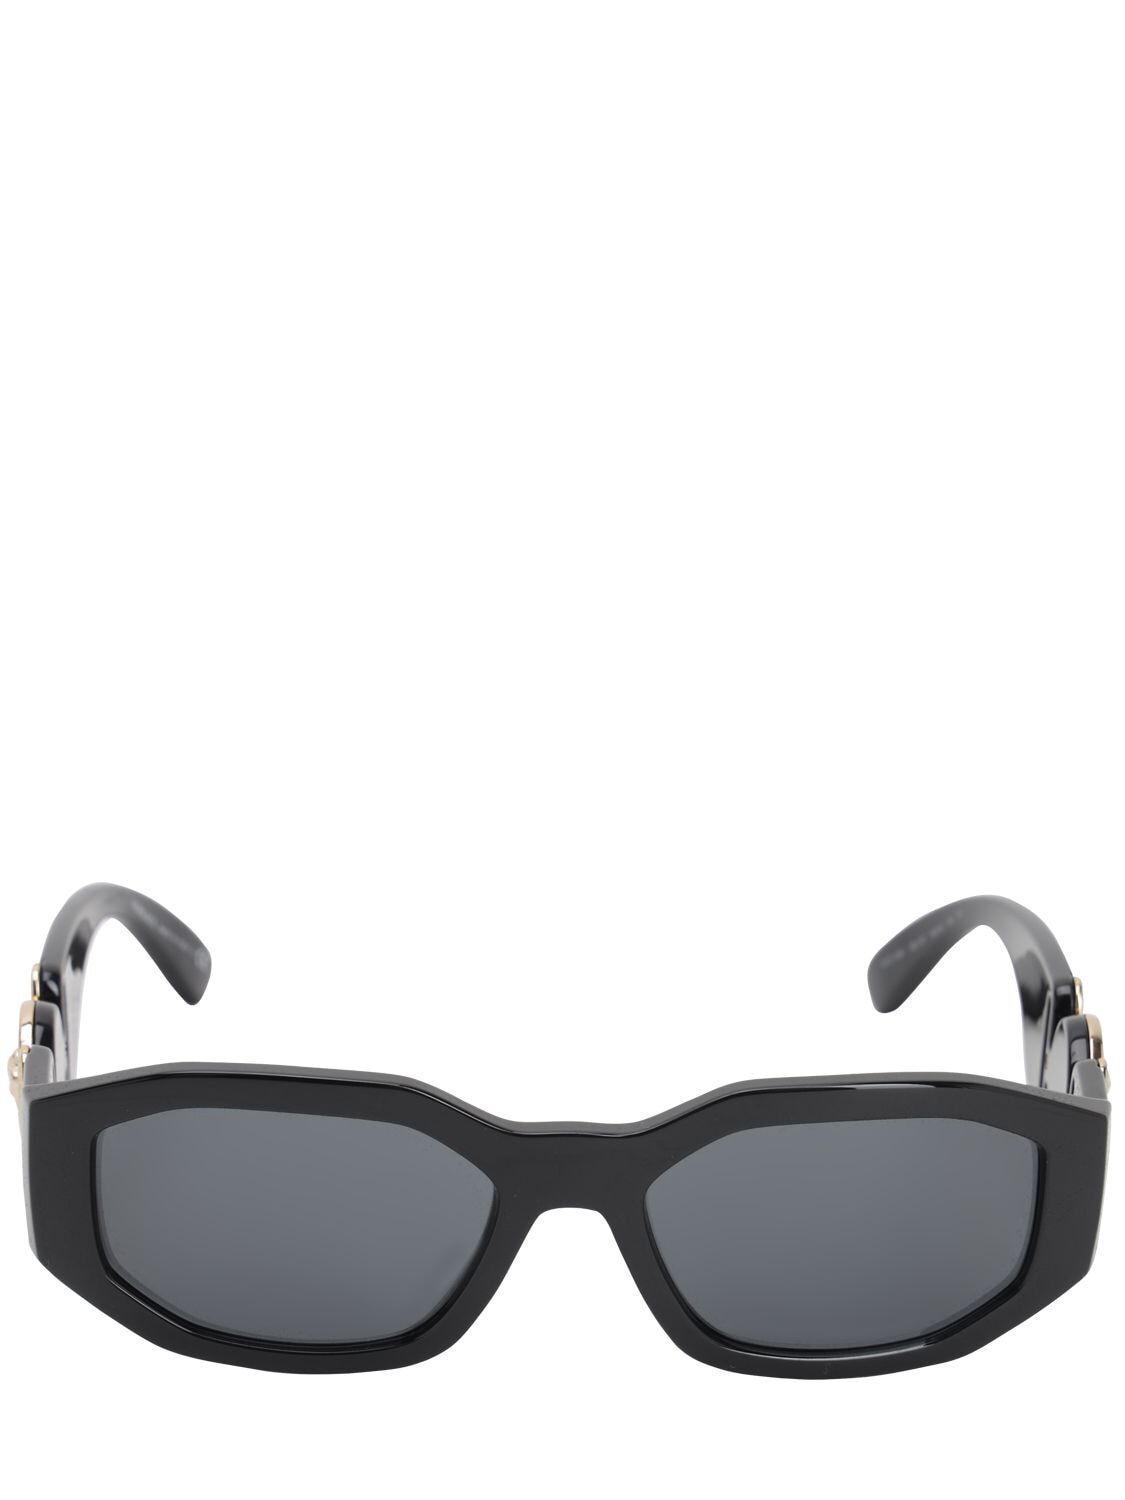 Versace Biggie Squared Sunglasses in black